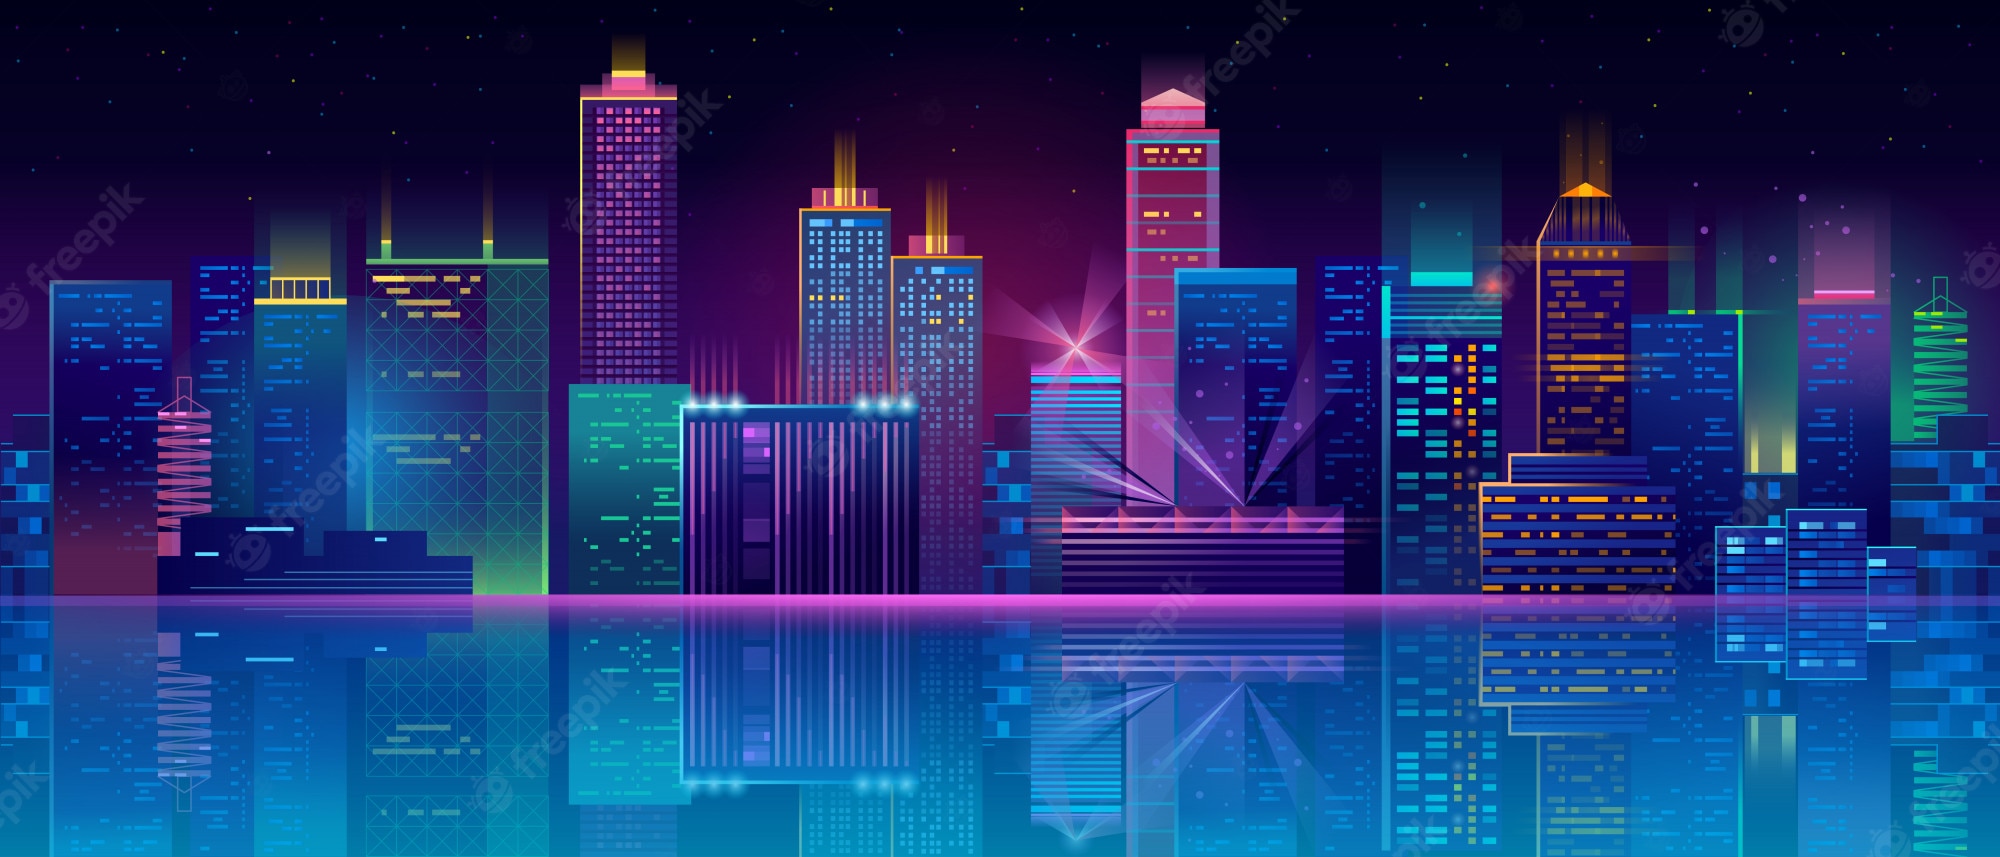 Neon city Image. Free Vectors, & PSD